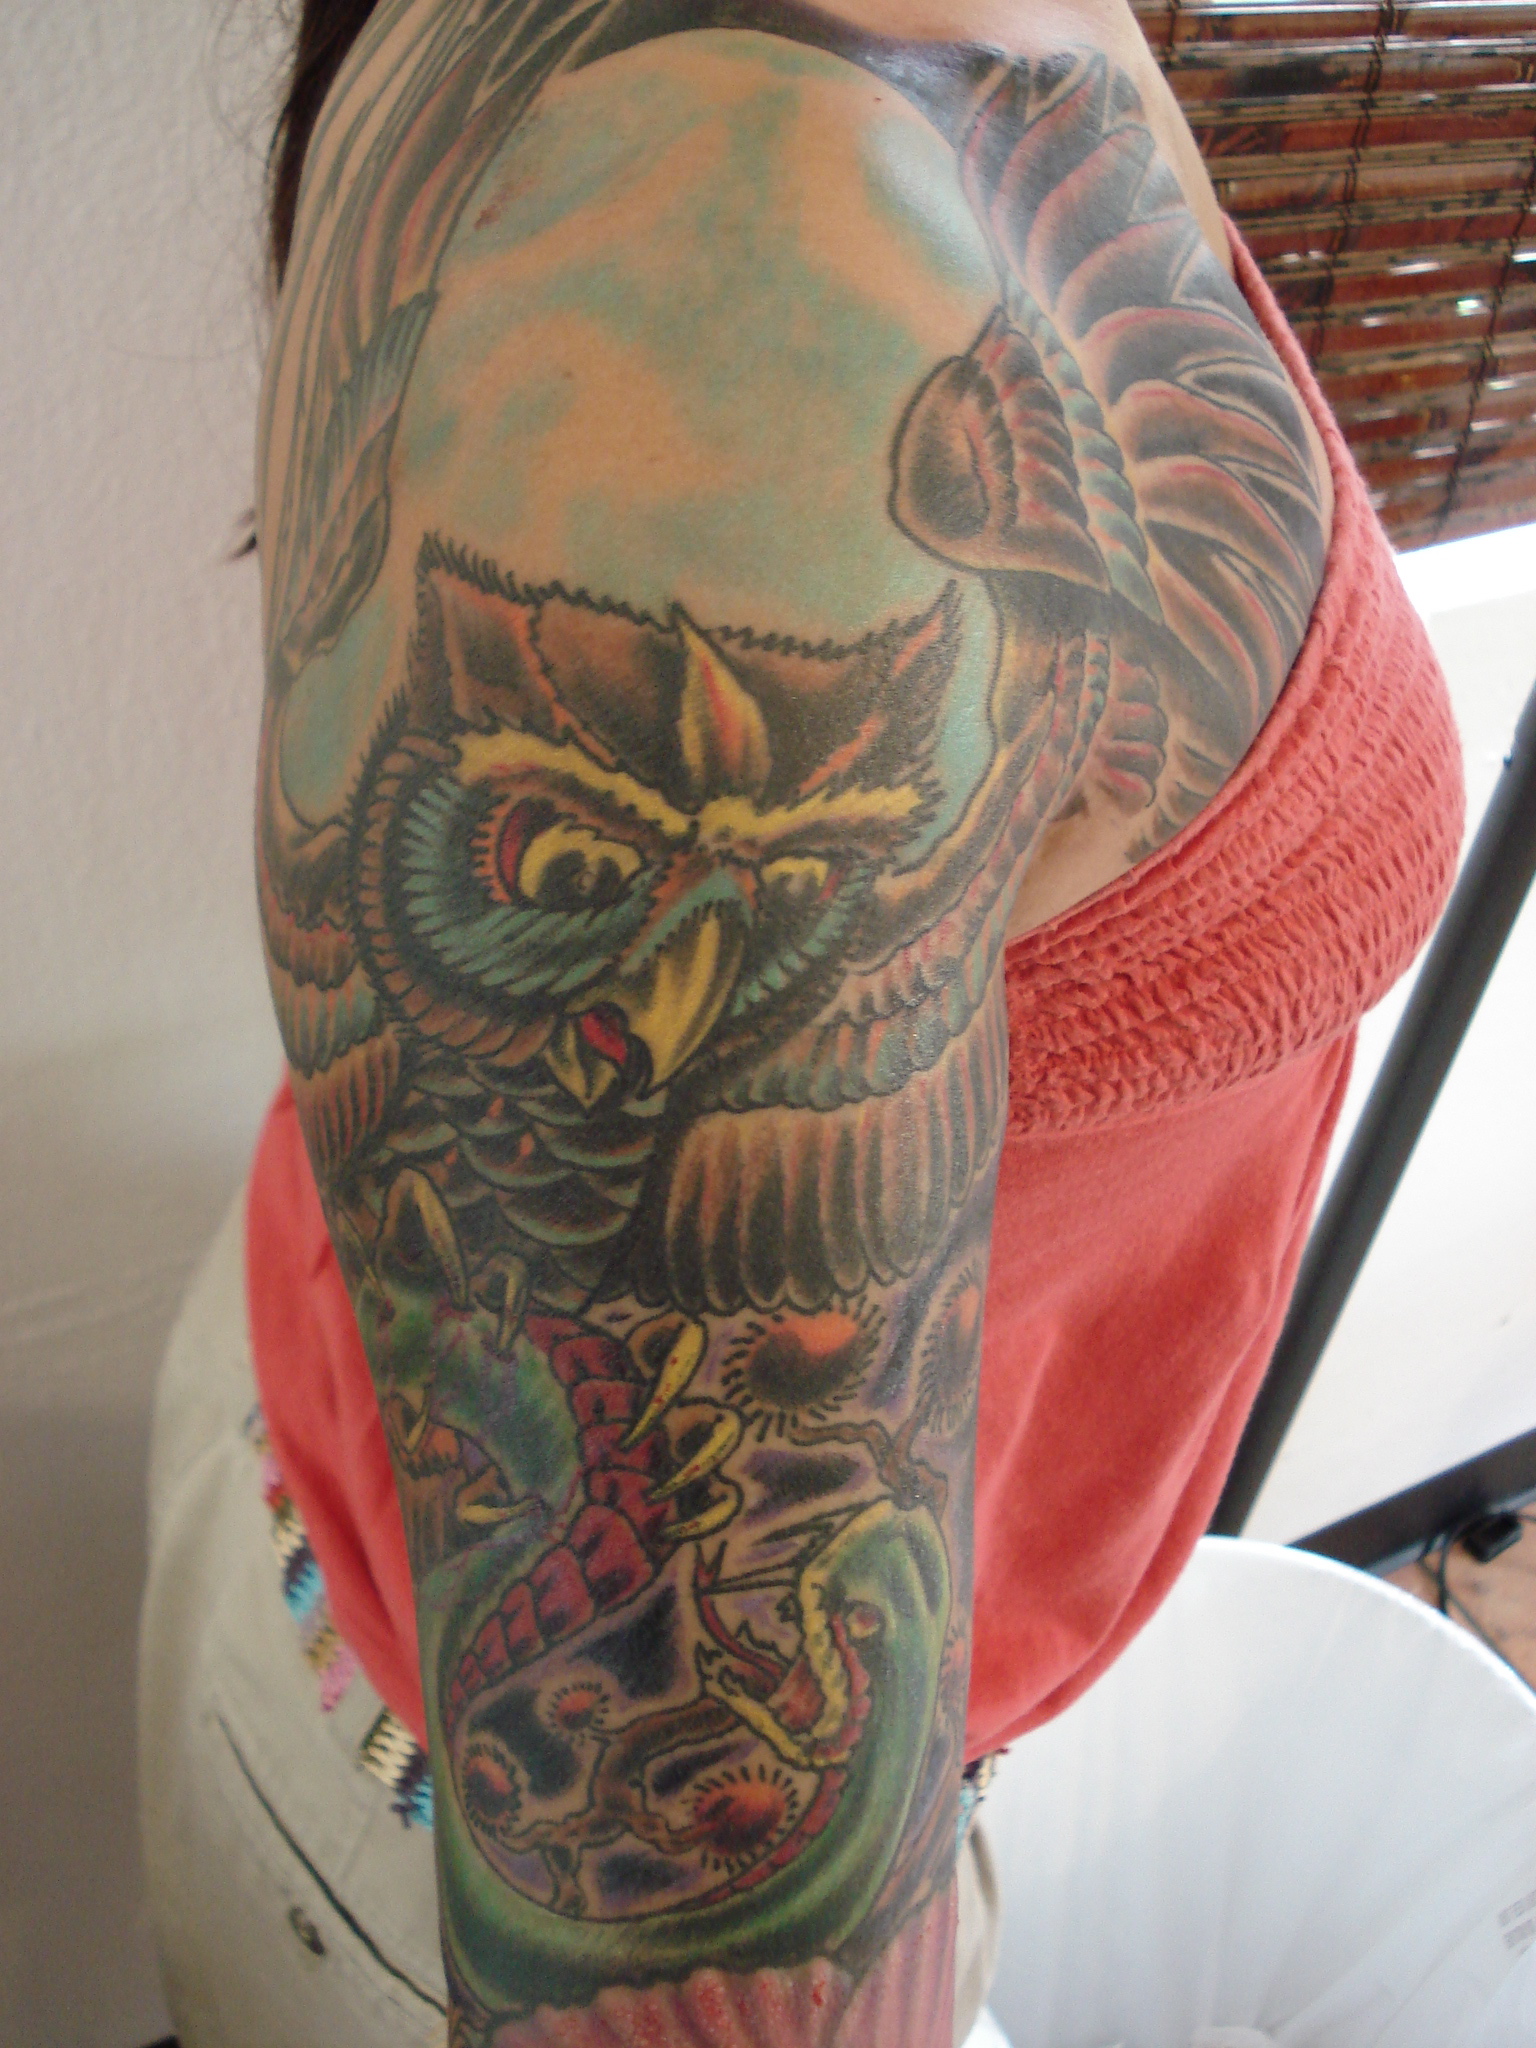 Best Tattoos For Men Genitals Images On Pinterest Artist Artists And Tattoo HD Tattoo